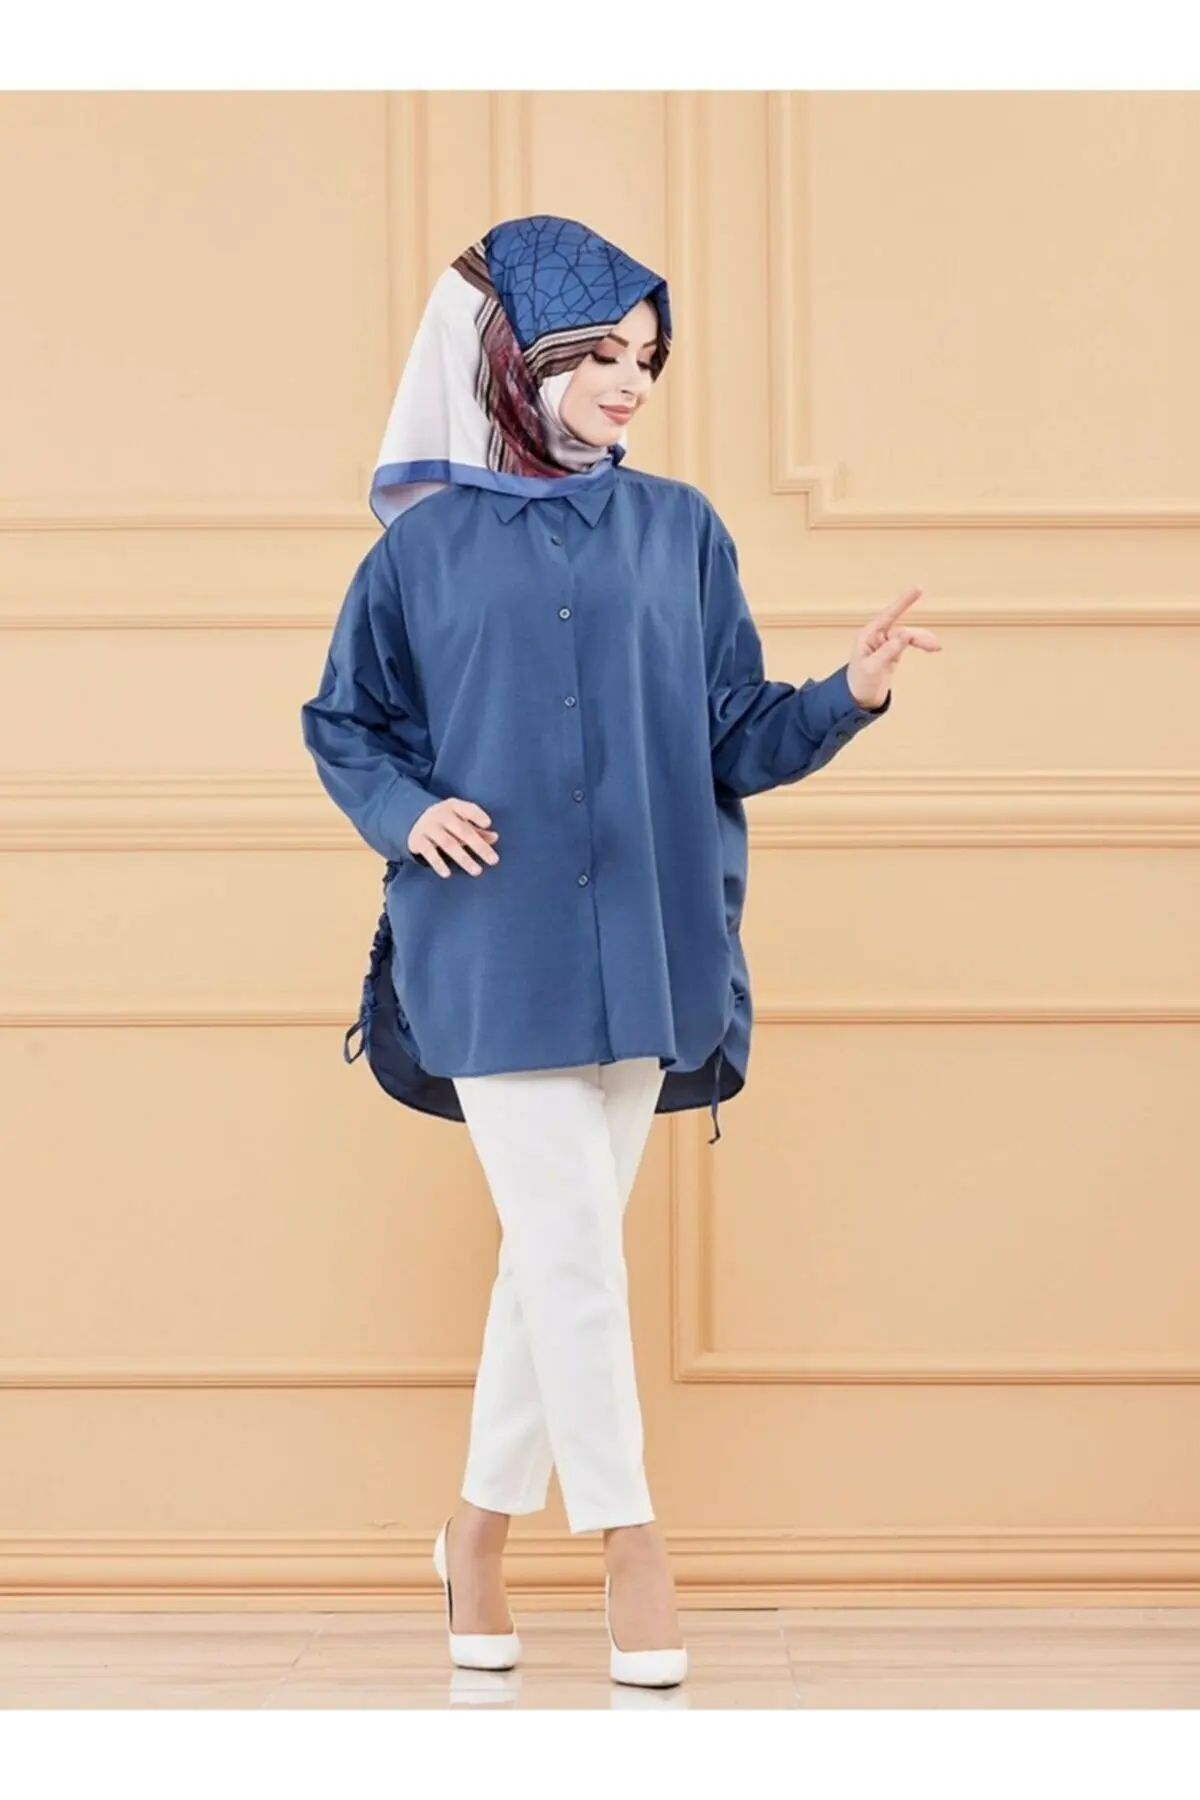 

Women's Tunic Buttoned Model Blue Robe Autumn Fall Hot Selling Dress 2022 New Season Long Shirt Islamic Hijab Muslim Fit Kaftan